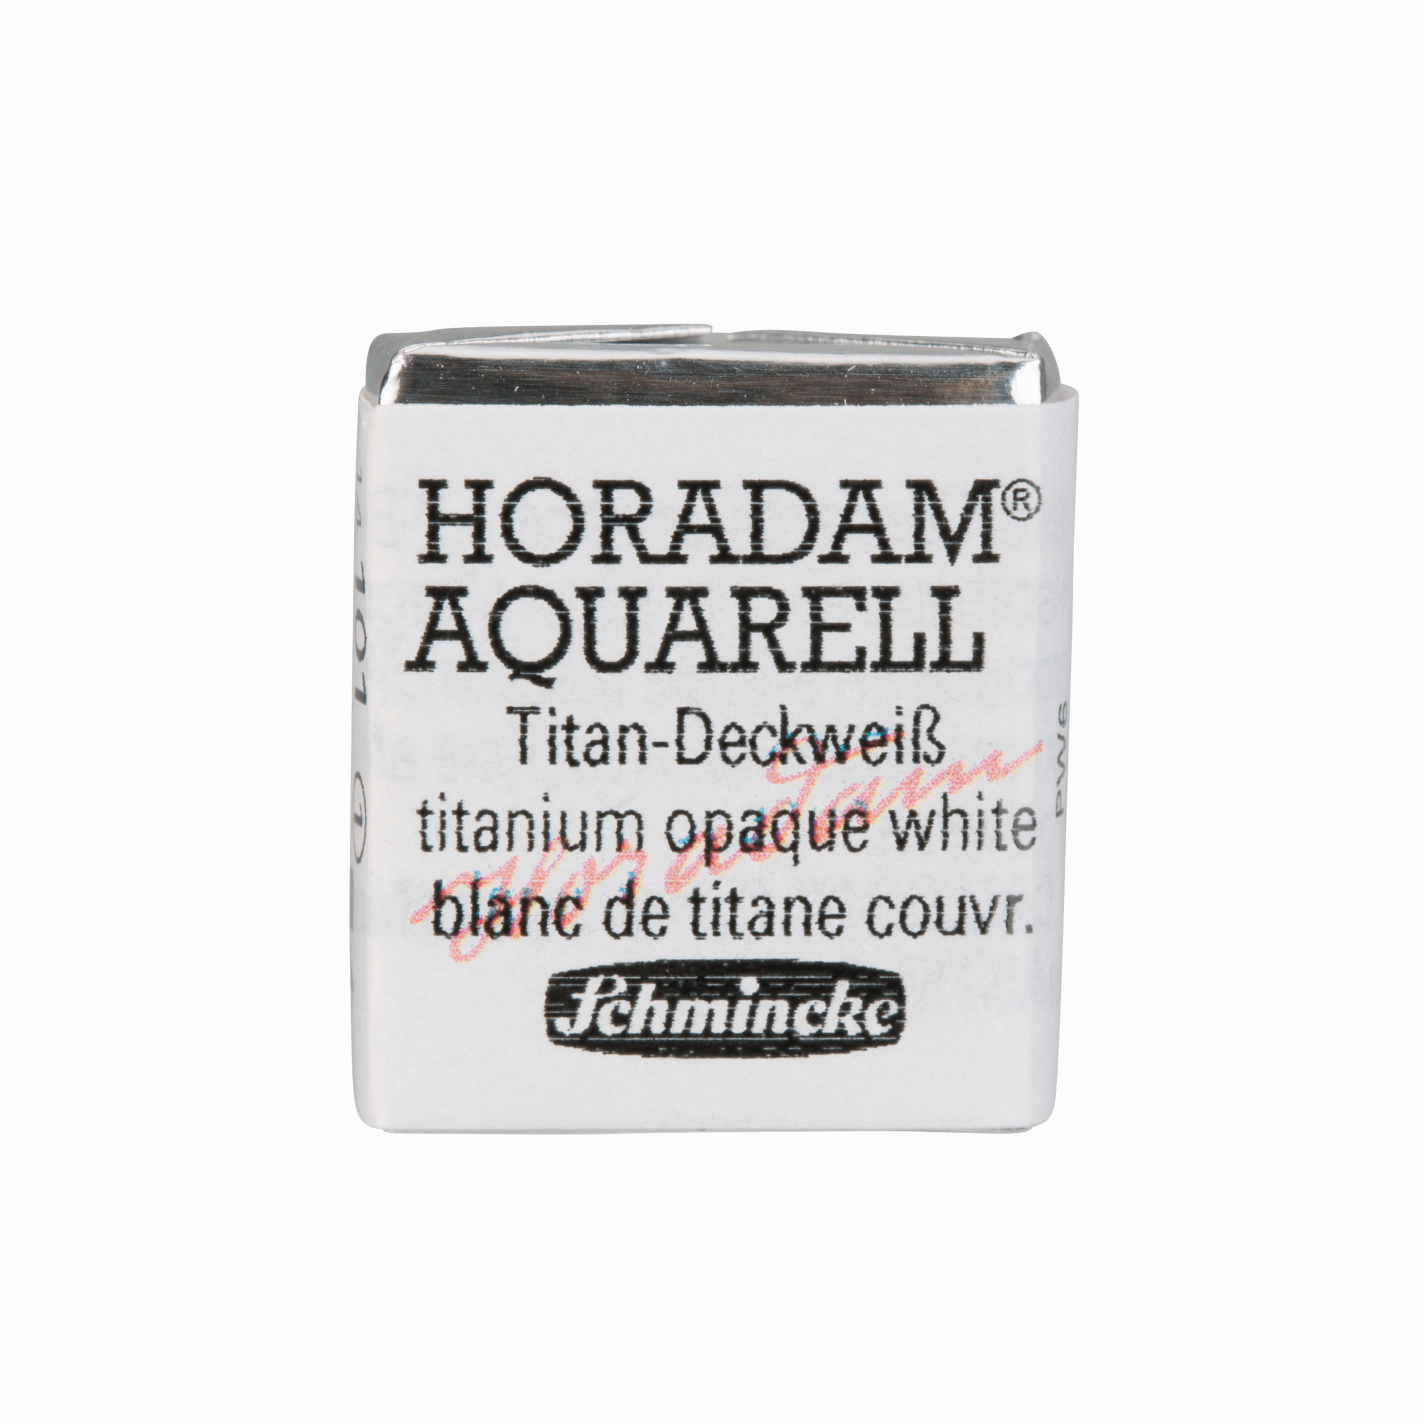 Schmincke Horadam Aquarell pans 1/2 pan Titanium Opaque White